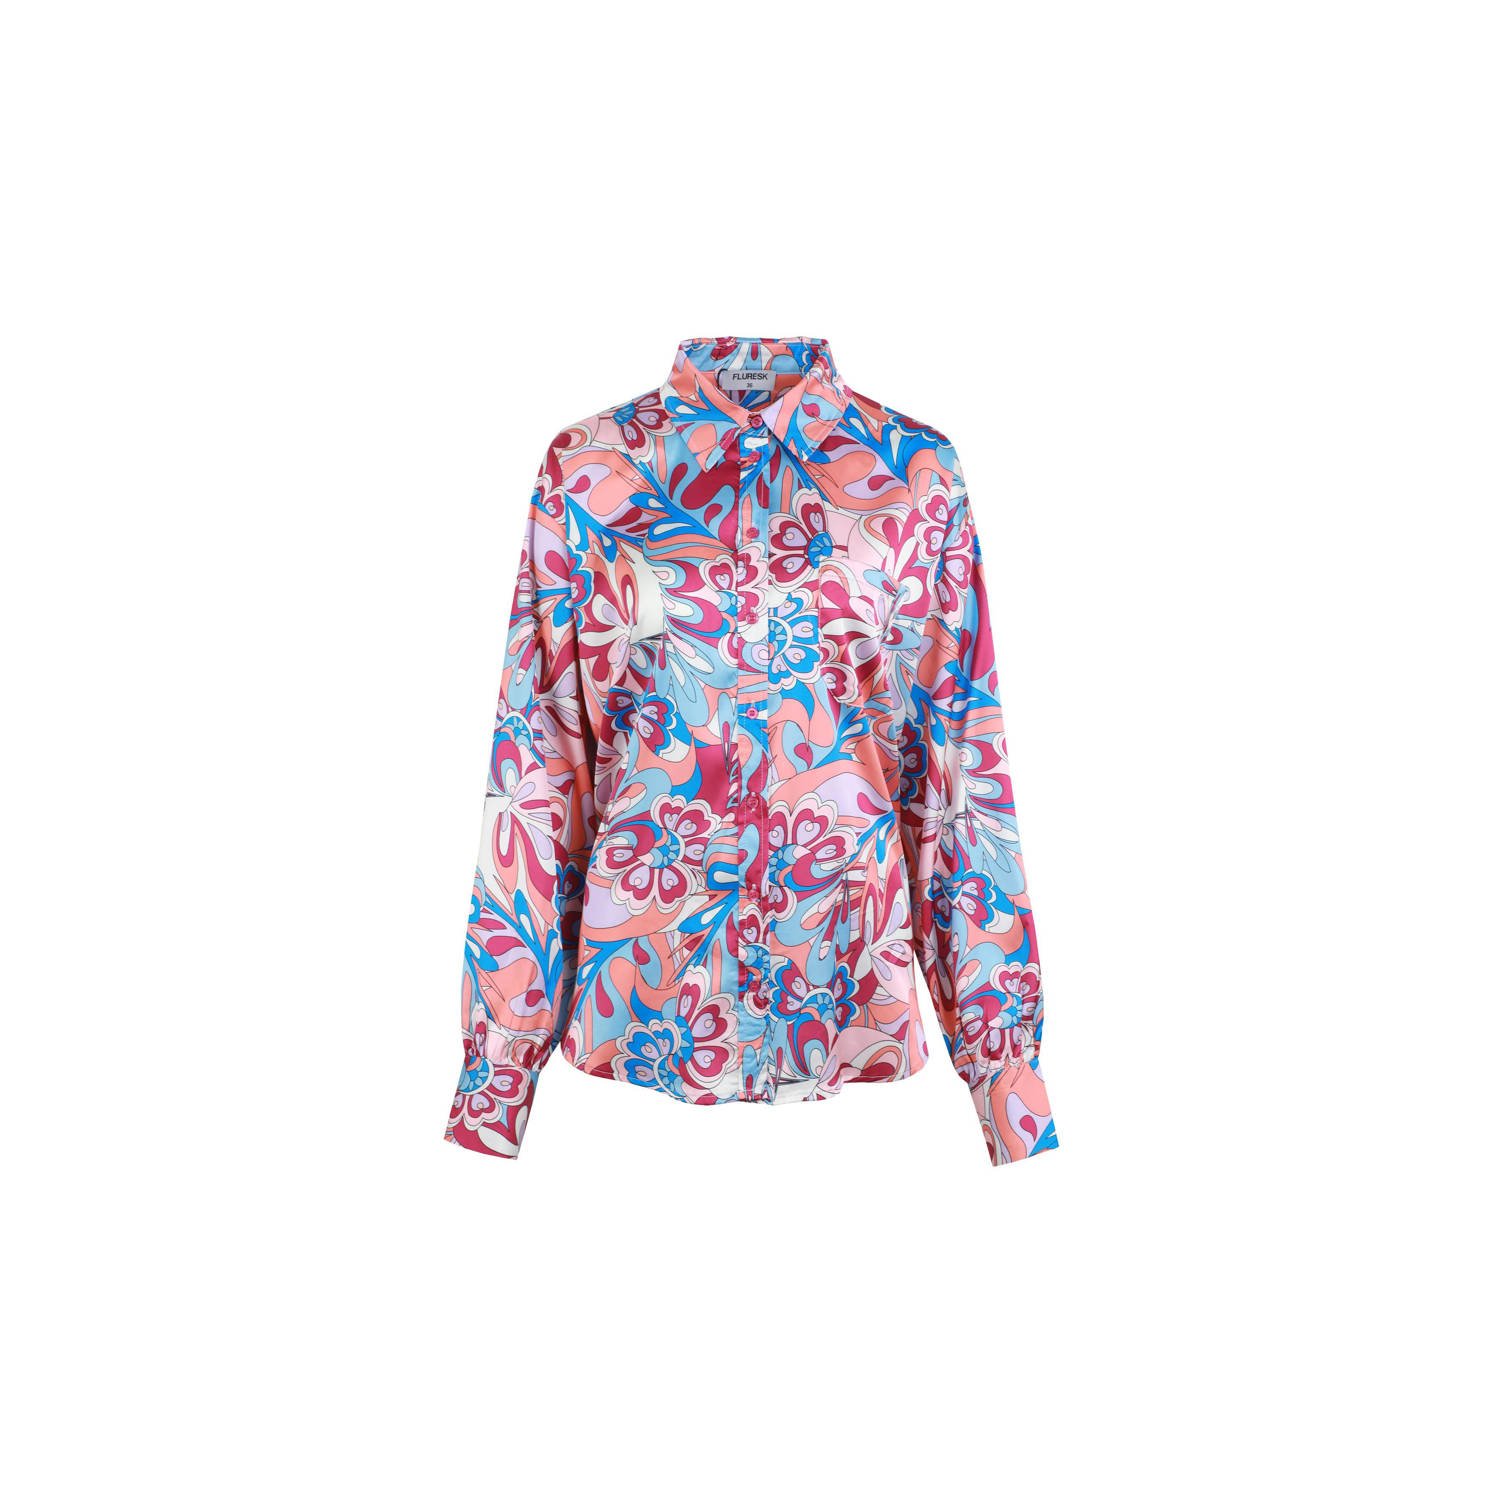 FLURESK x Wehkamp&Co x Wehkamp&Co gebloemde blouse Sandra roze blauw